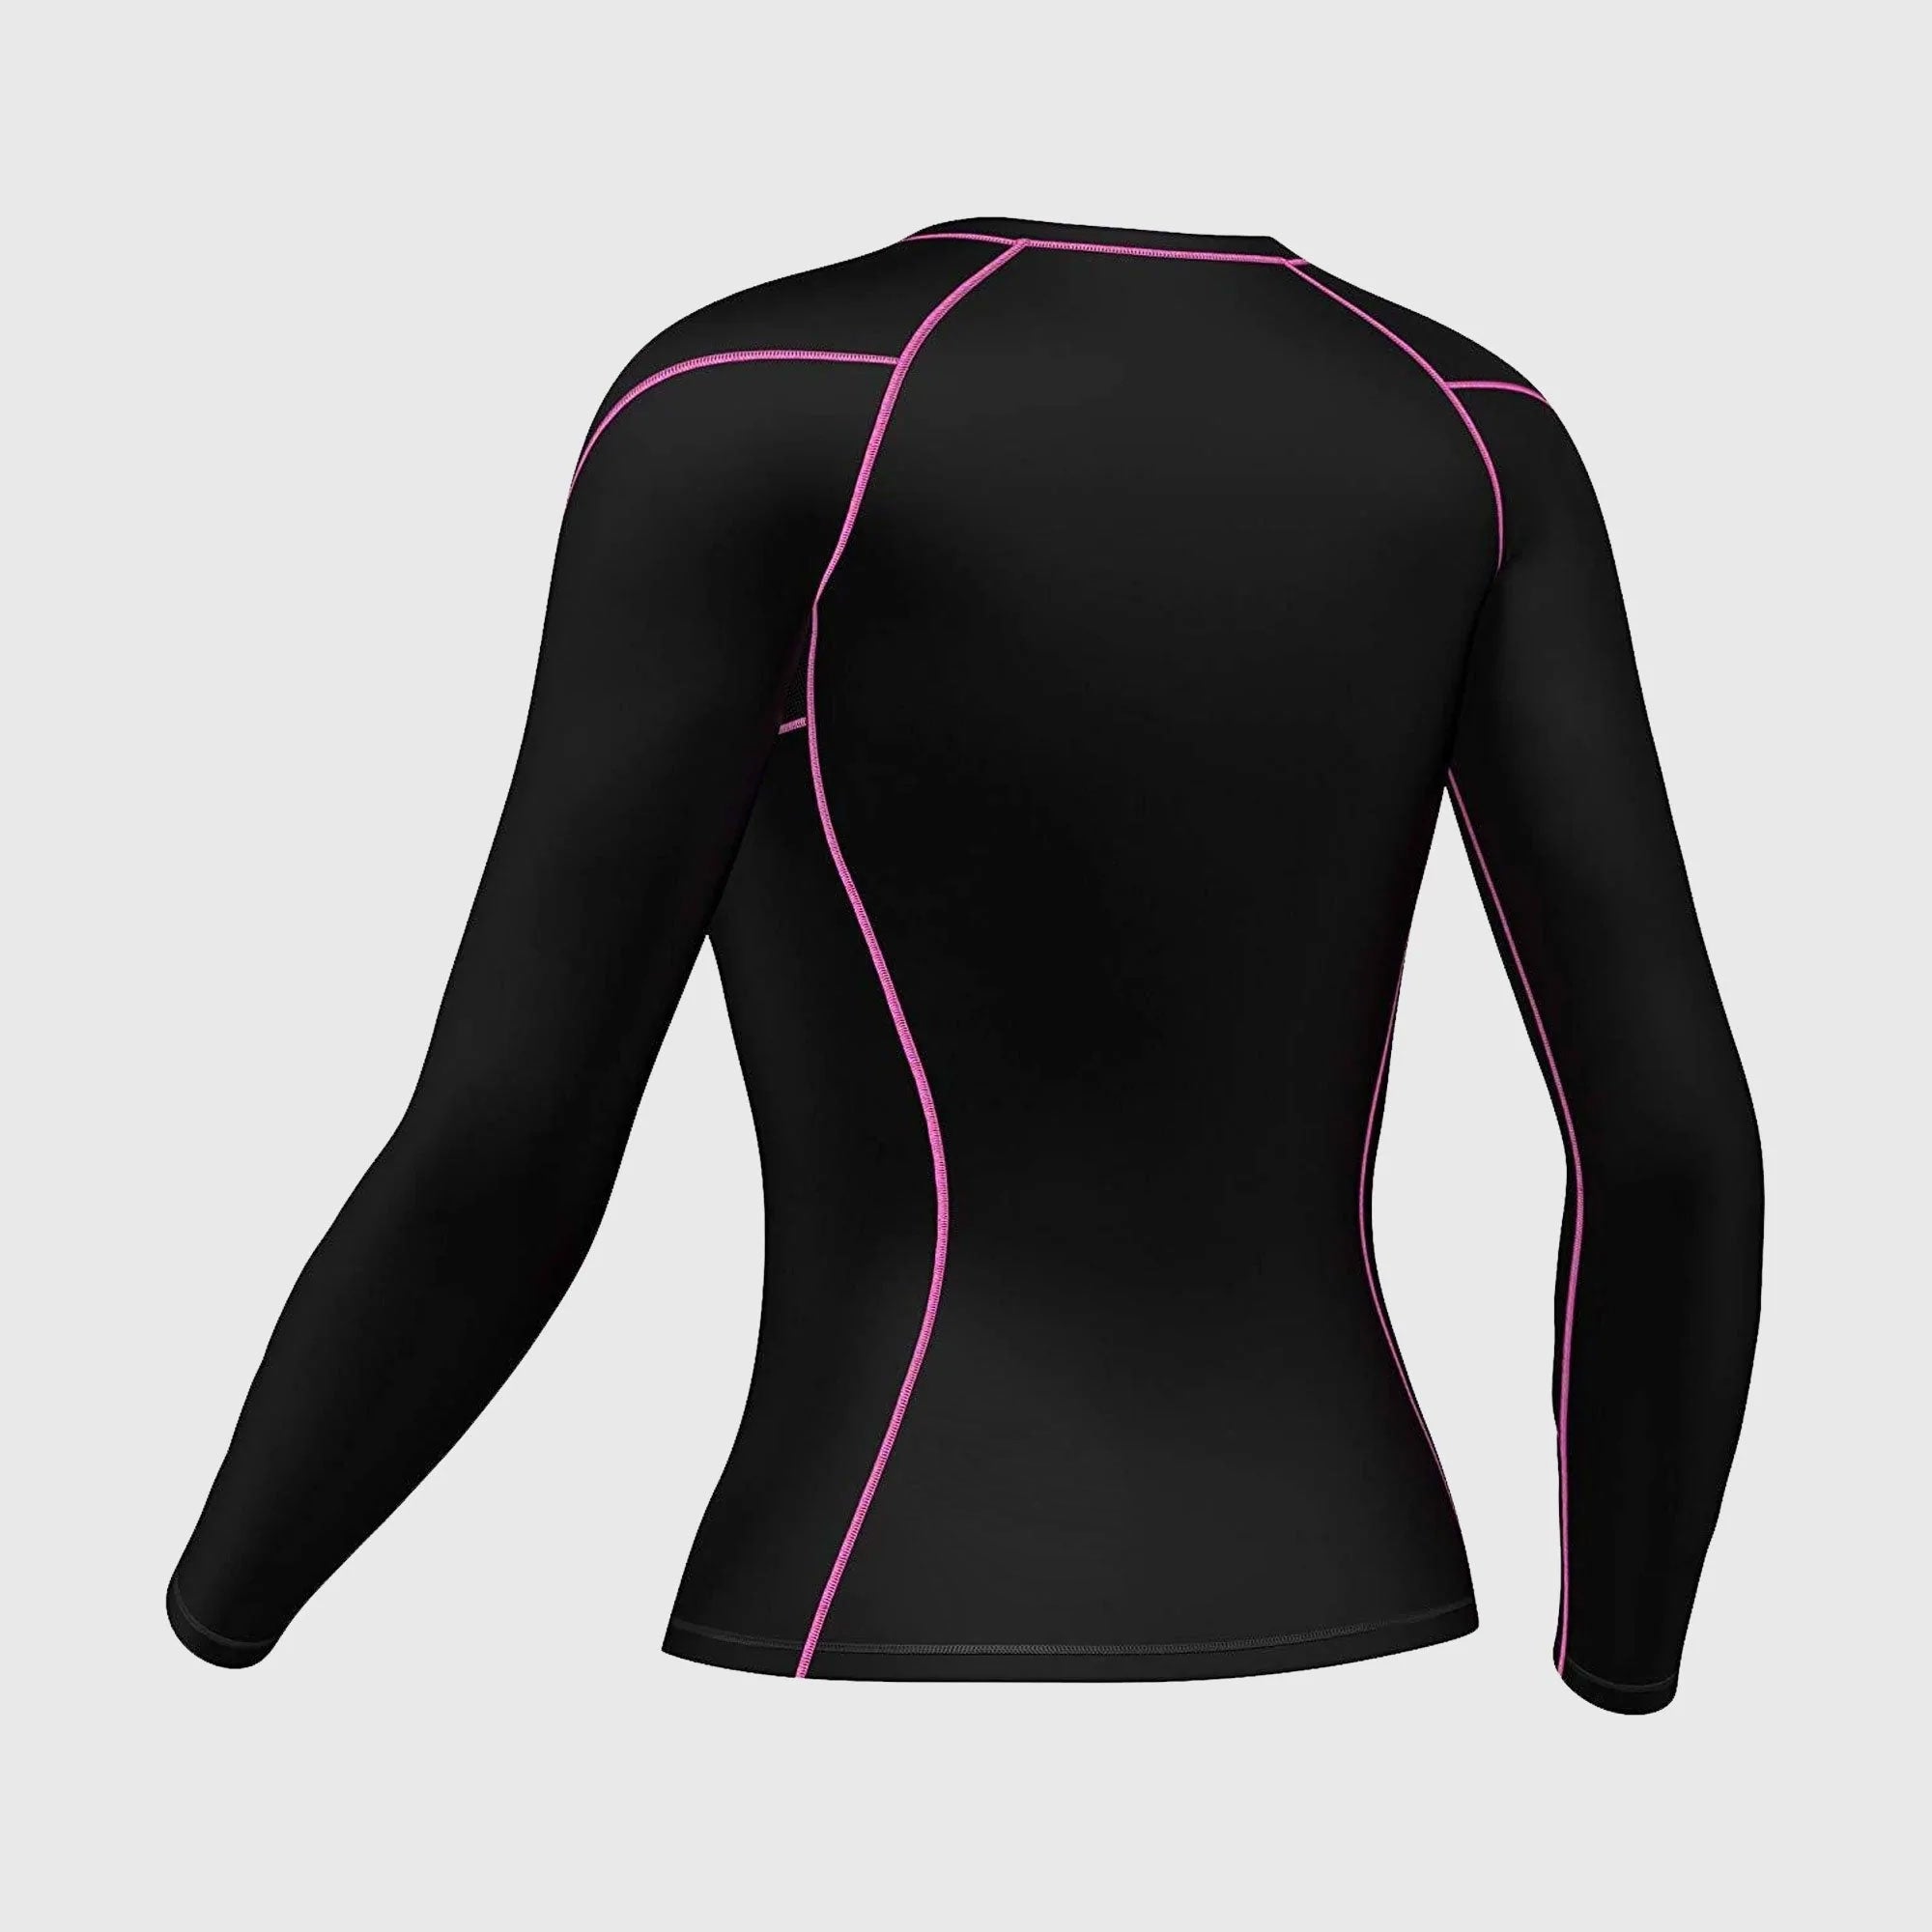 Fdx Monarch Women's Base Layer Compression Shirt Pink